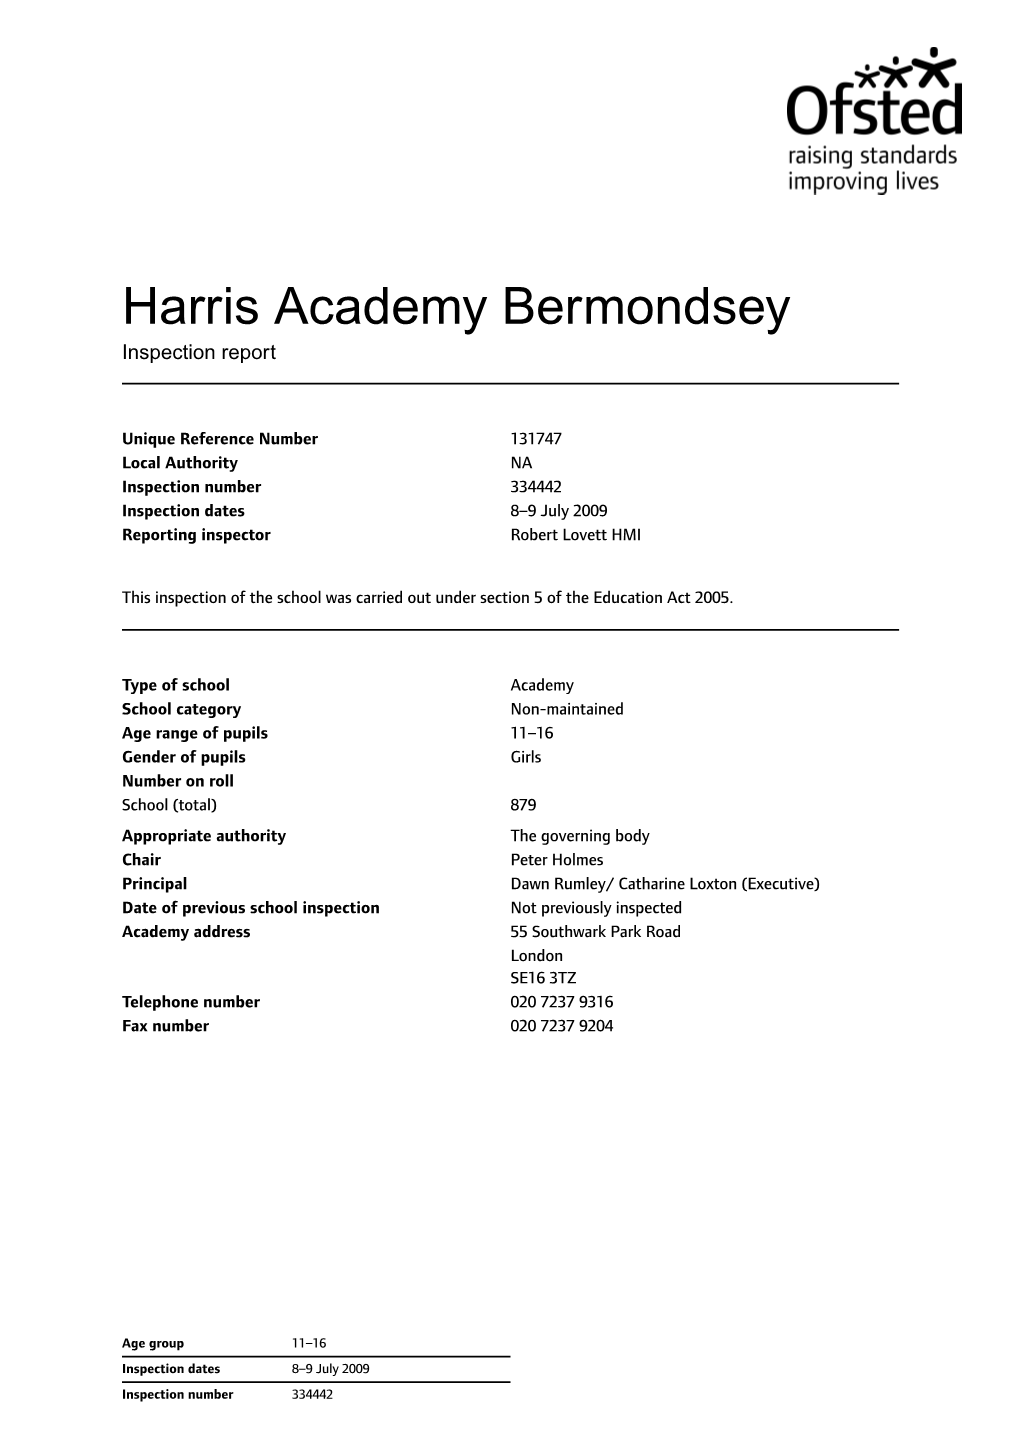 Harris Academy Bermondsey Inspection Report